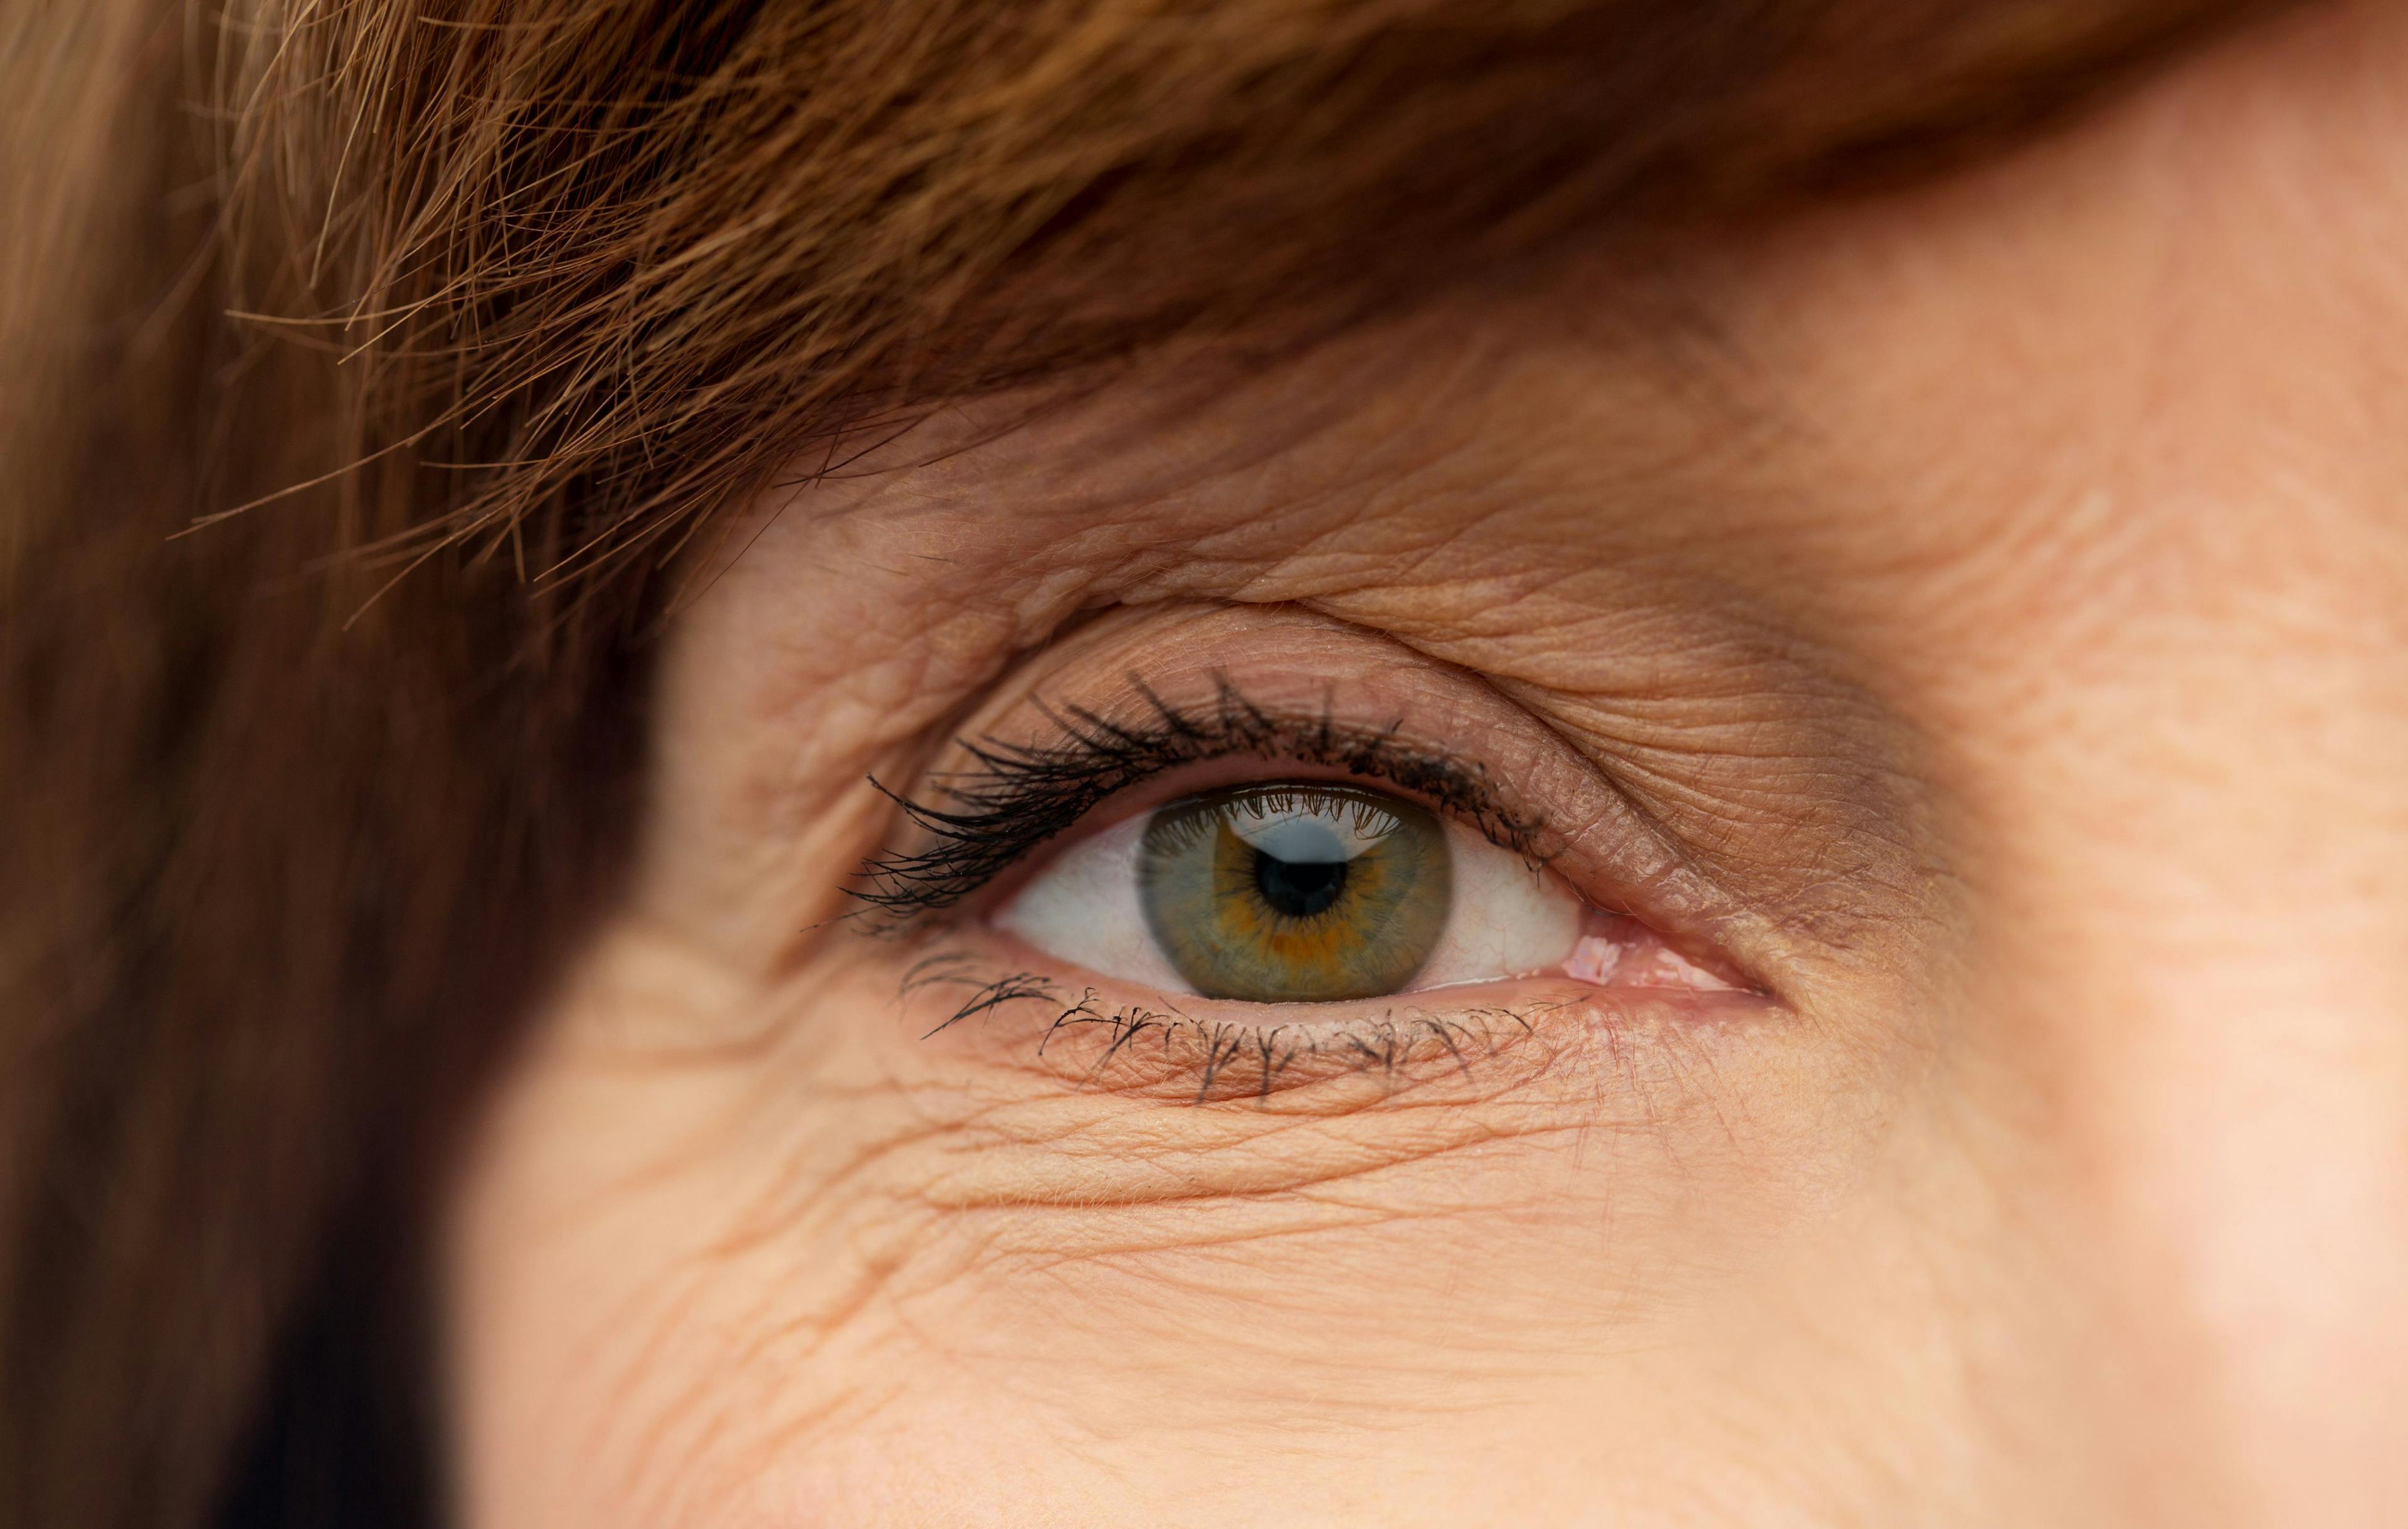 Eye of senior woman | Image credit: Syda Productions - stock.adobe.com